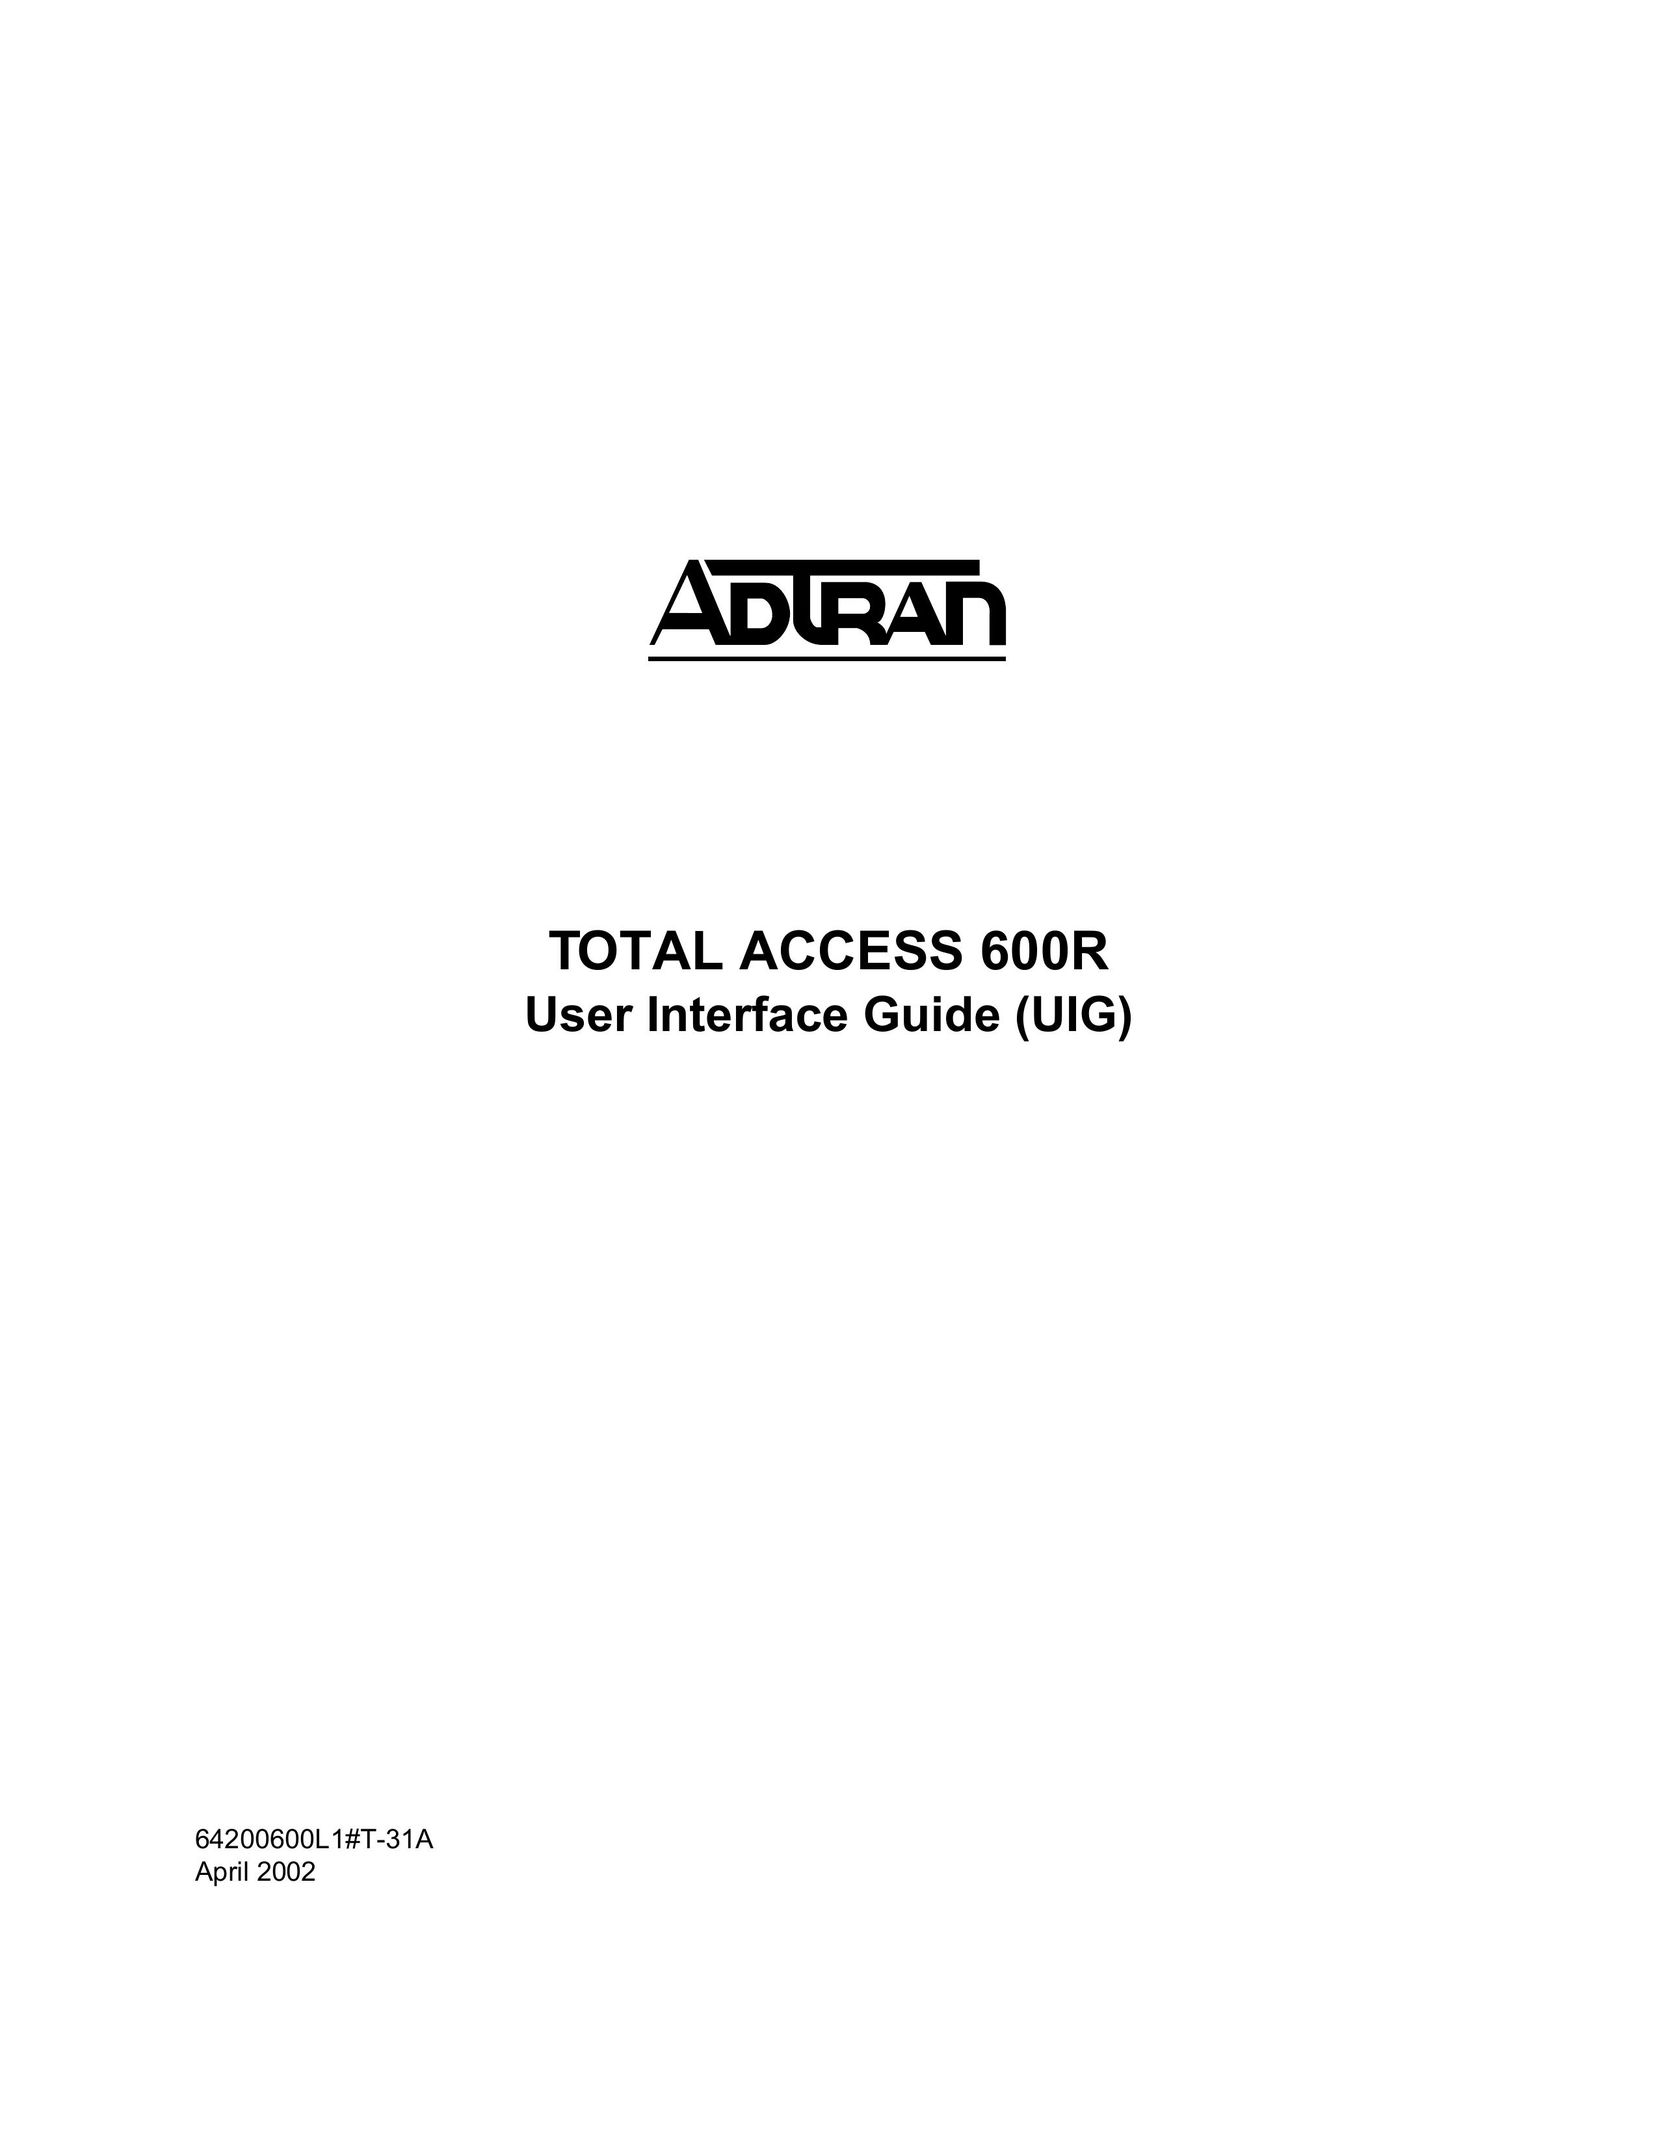 ADTRAN 600R Network Router User Manual